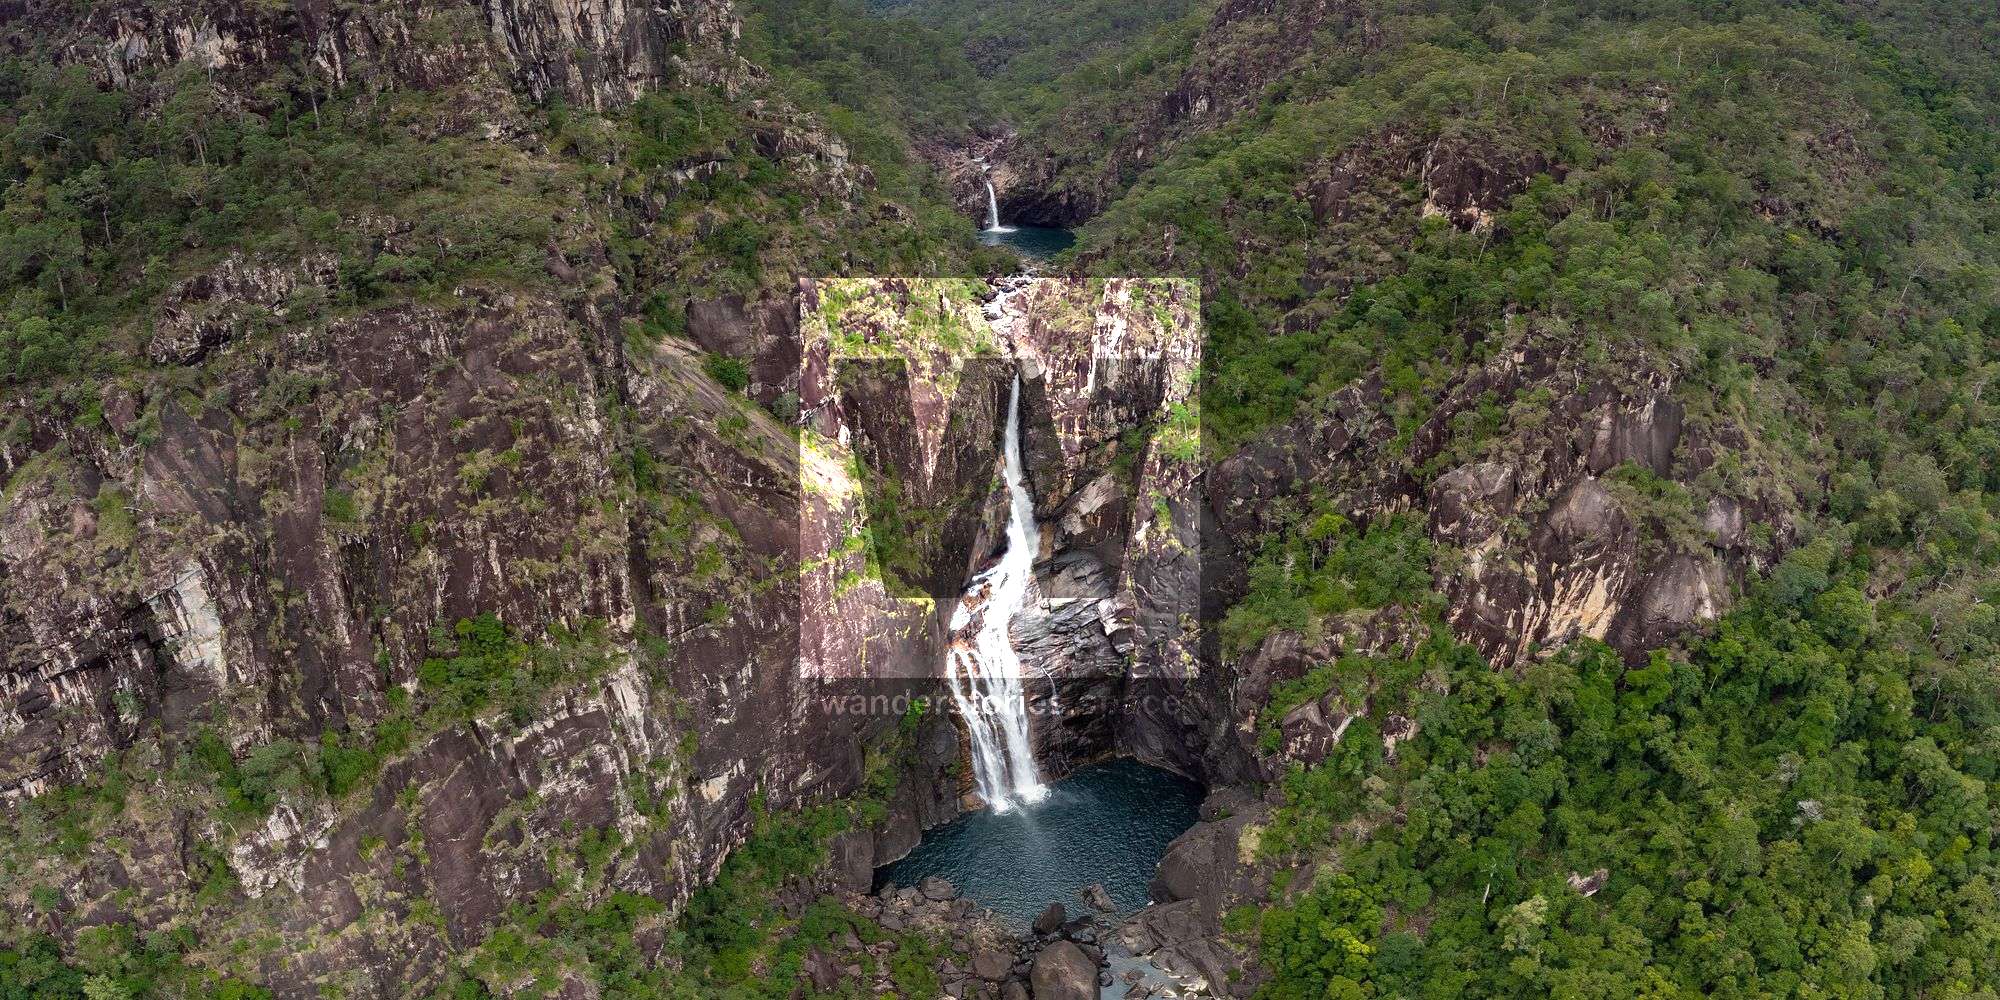 Yamanie Falls girringun national park